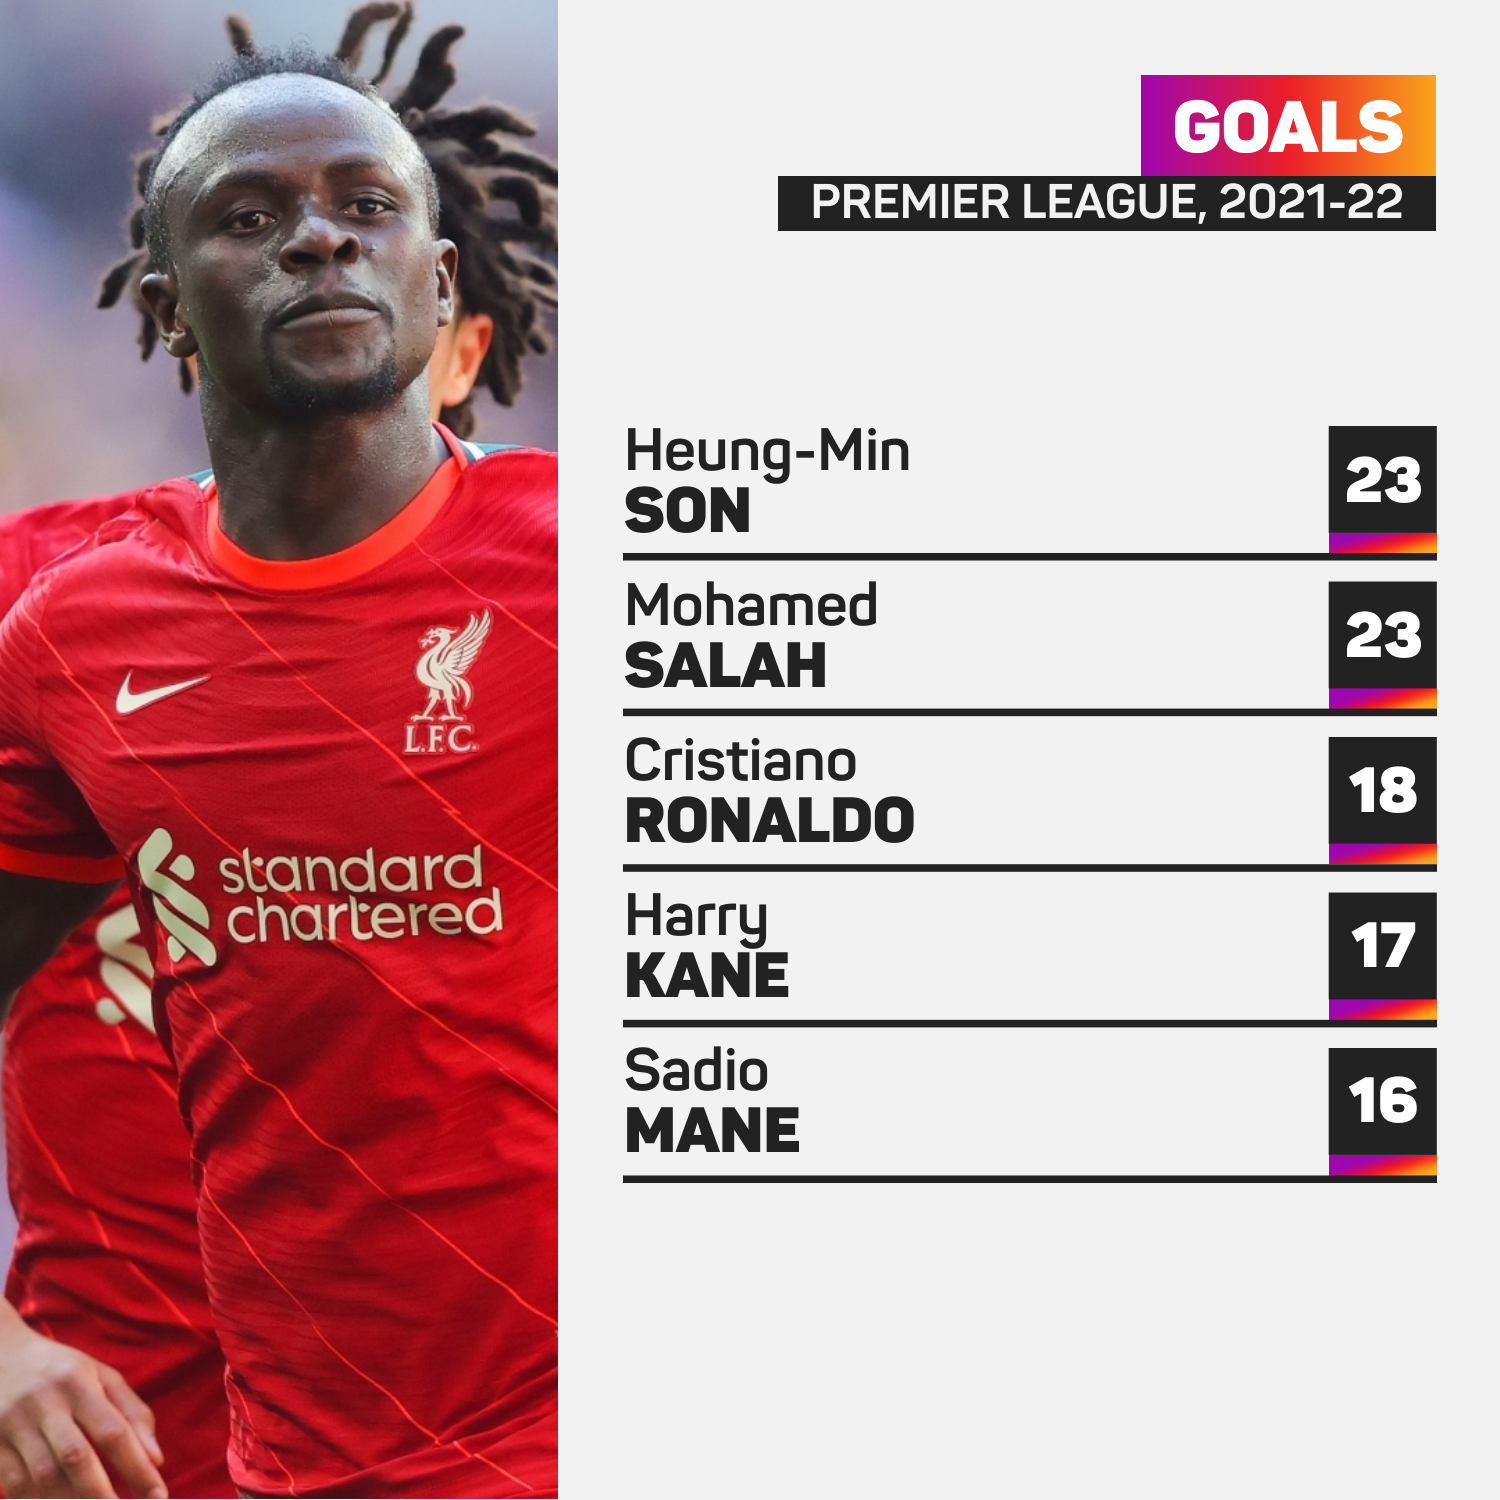 Sadio Mane scored 16 Premier League goals in 2021-22